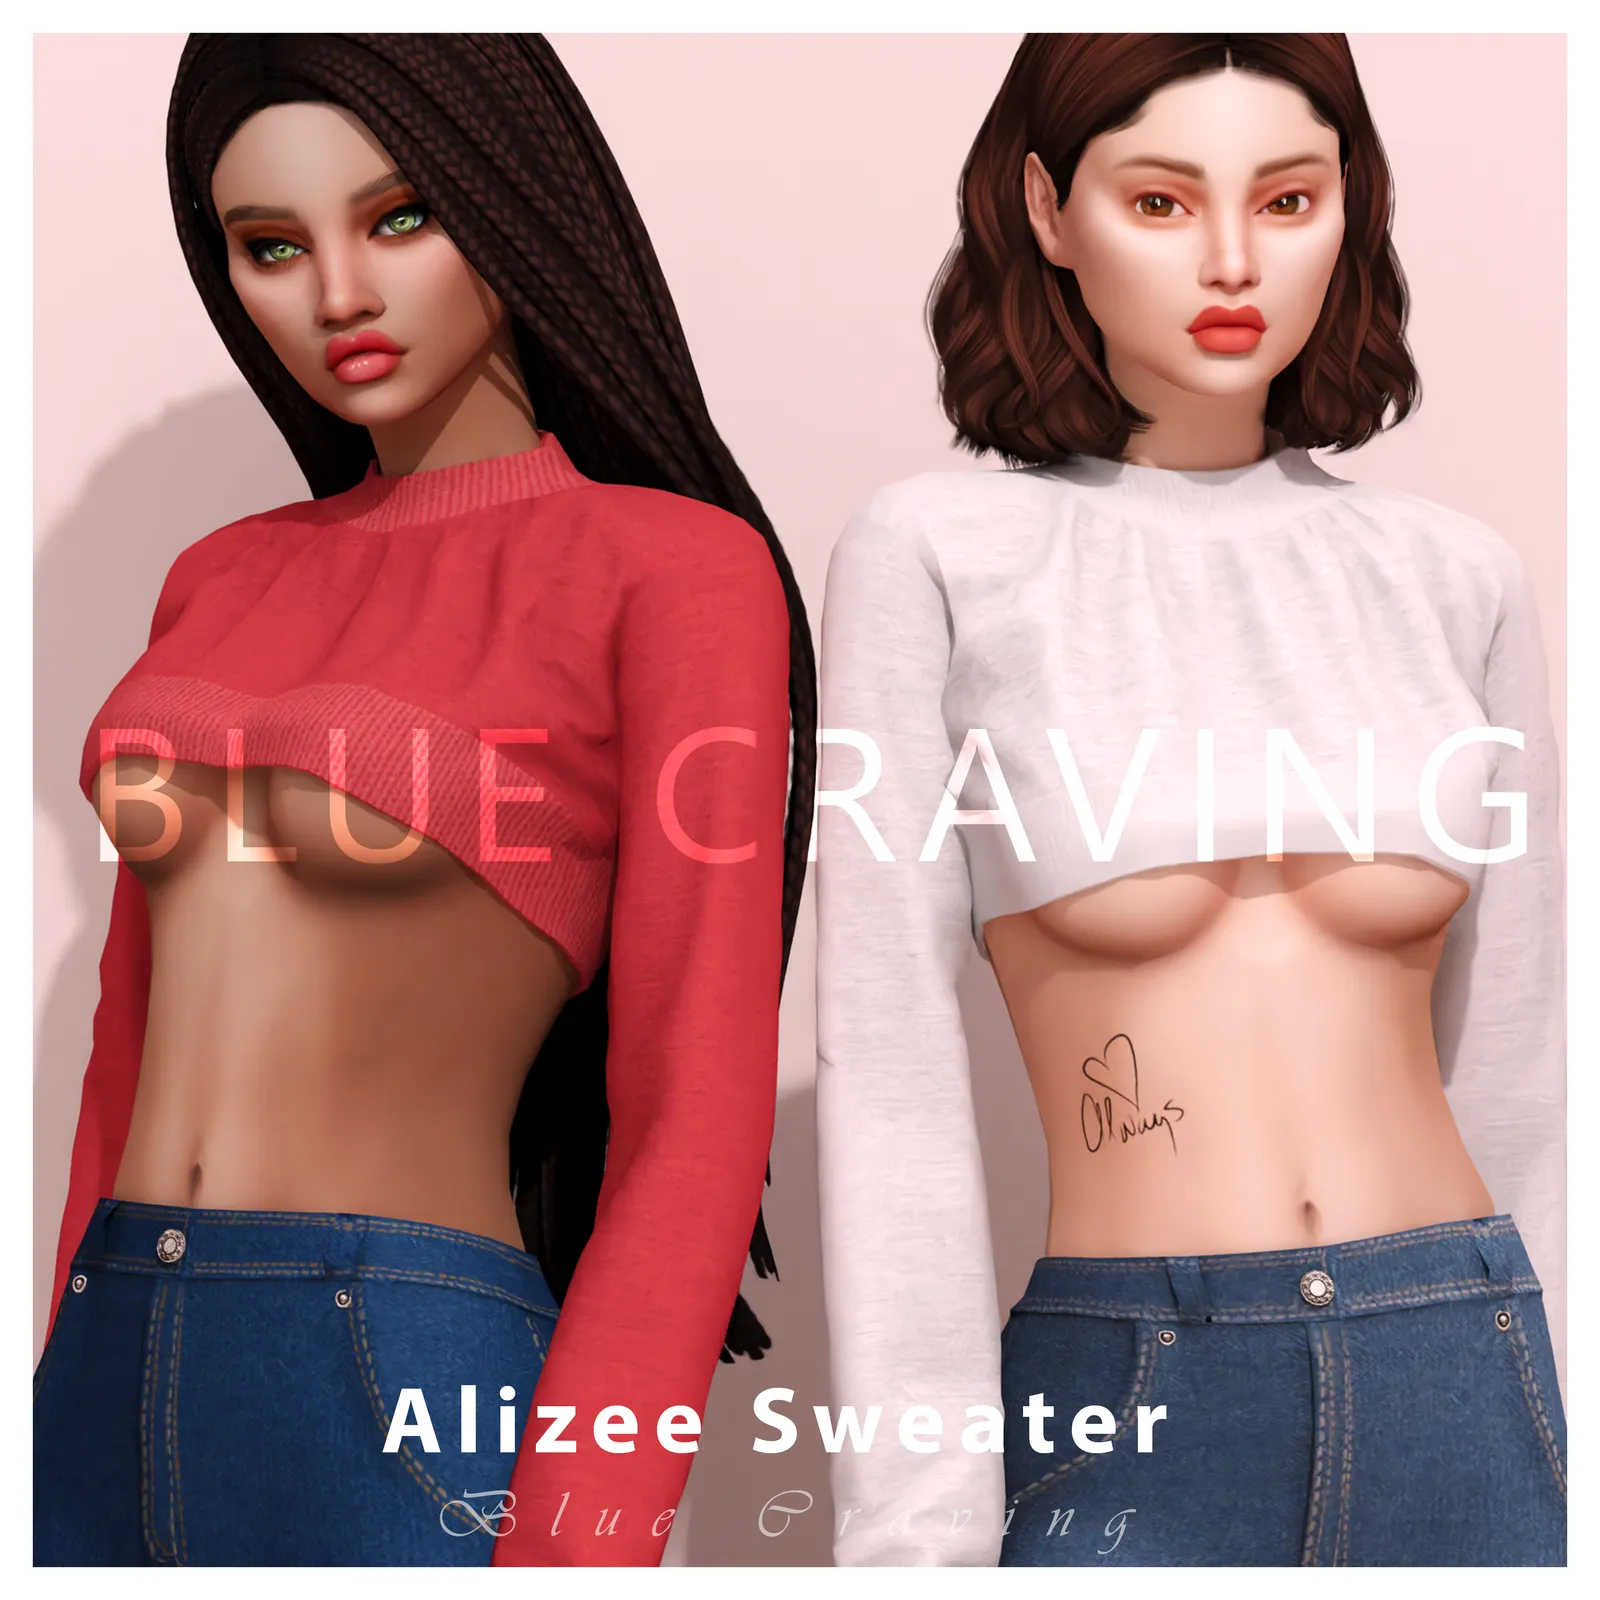 Alizee Sweater